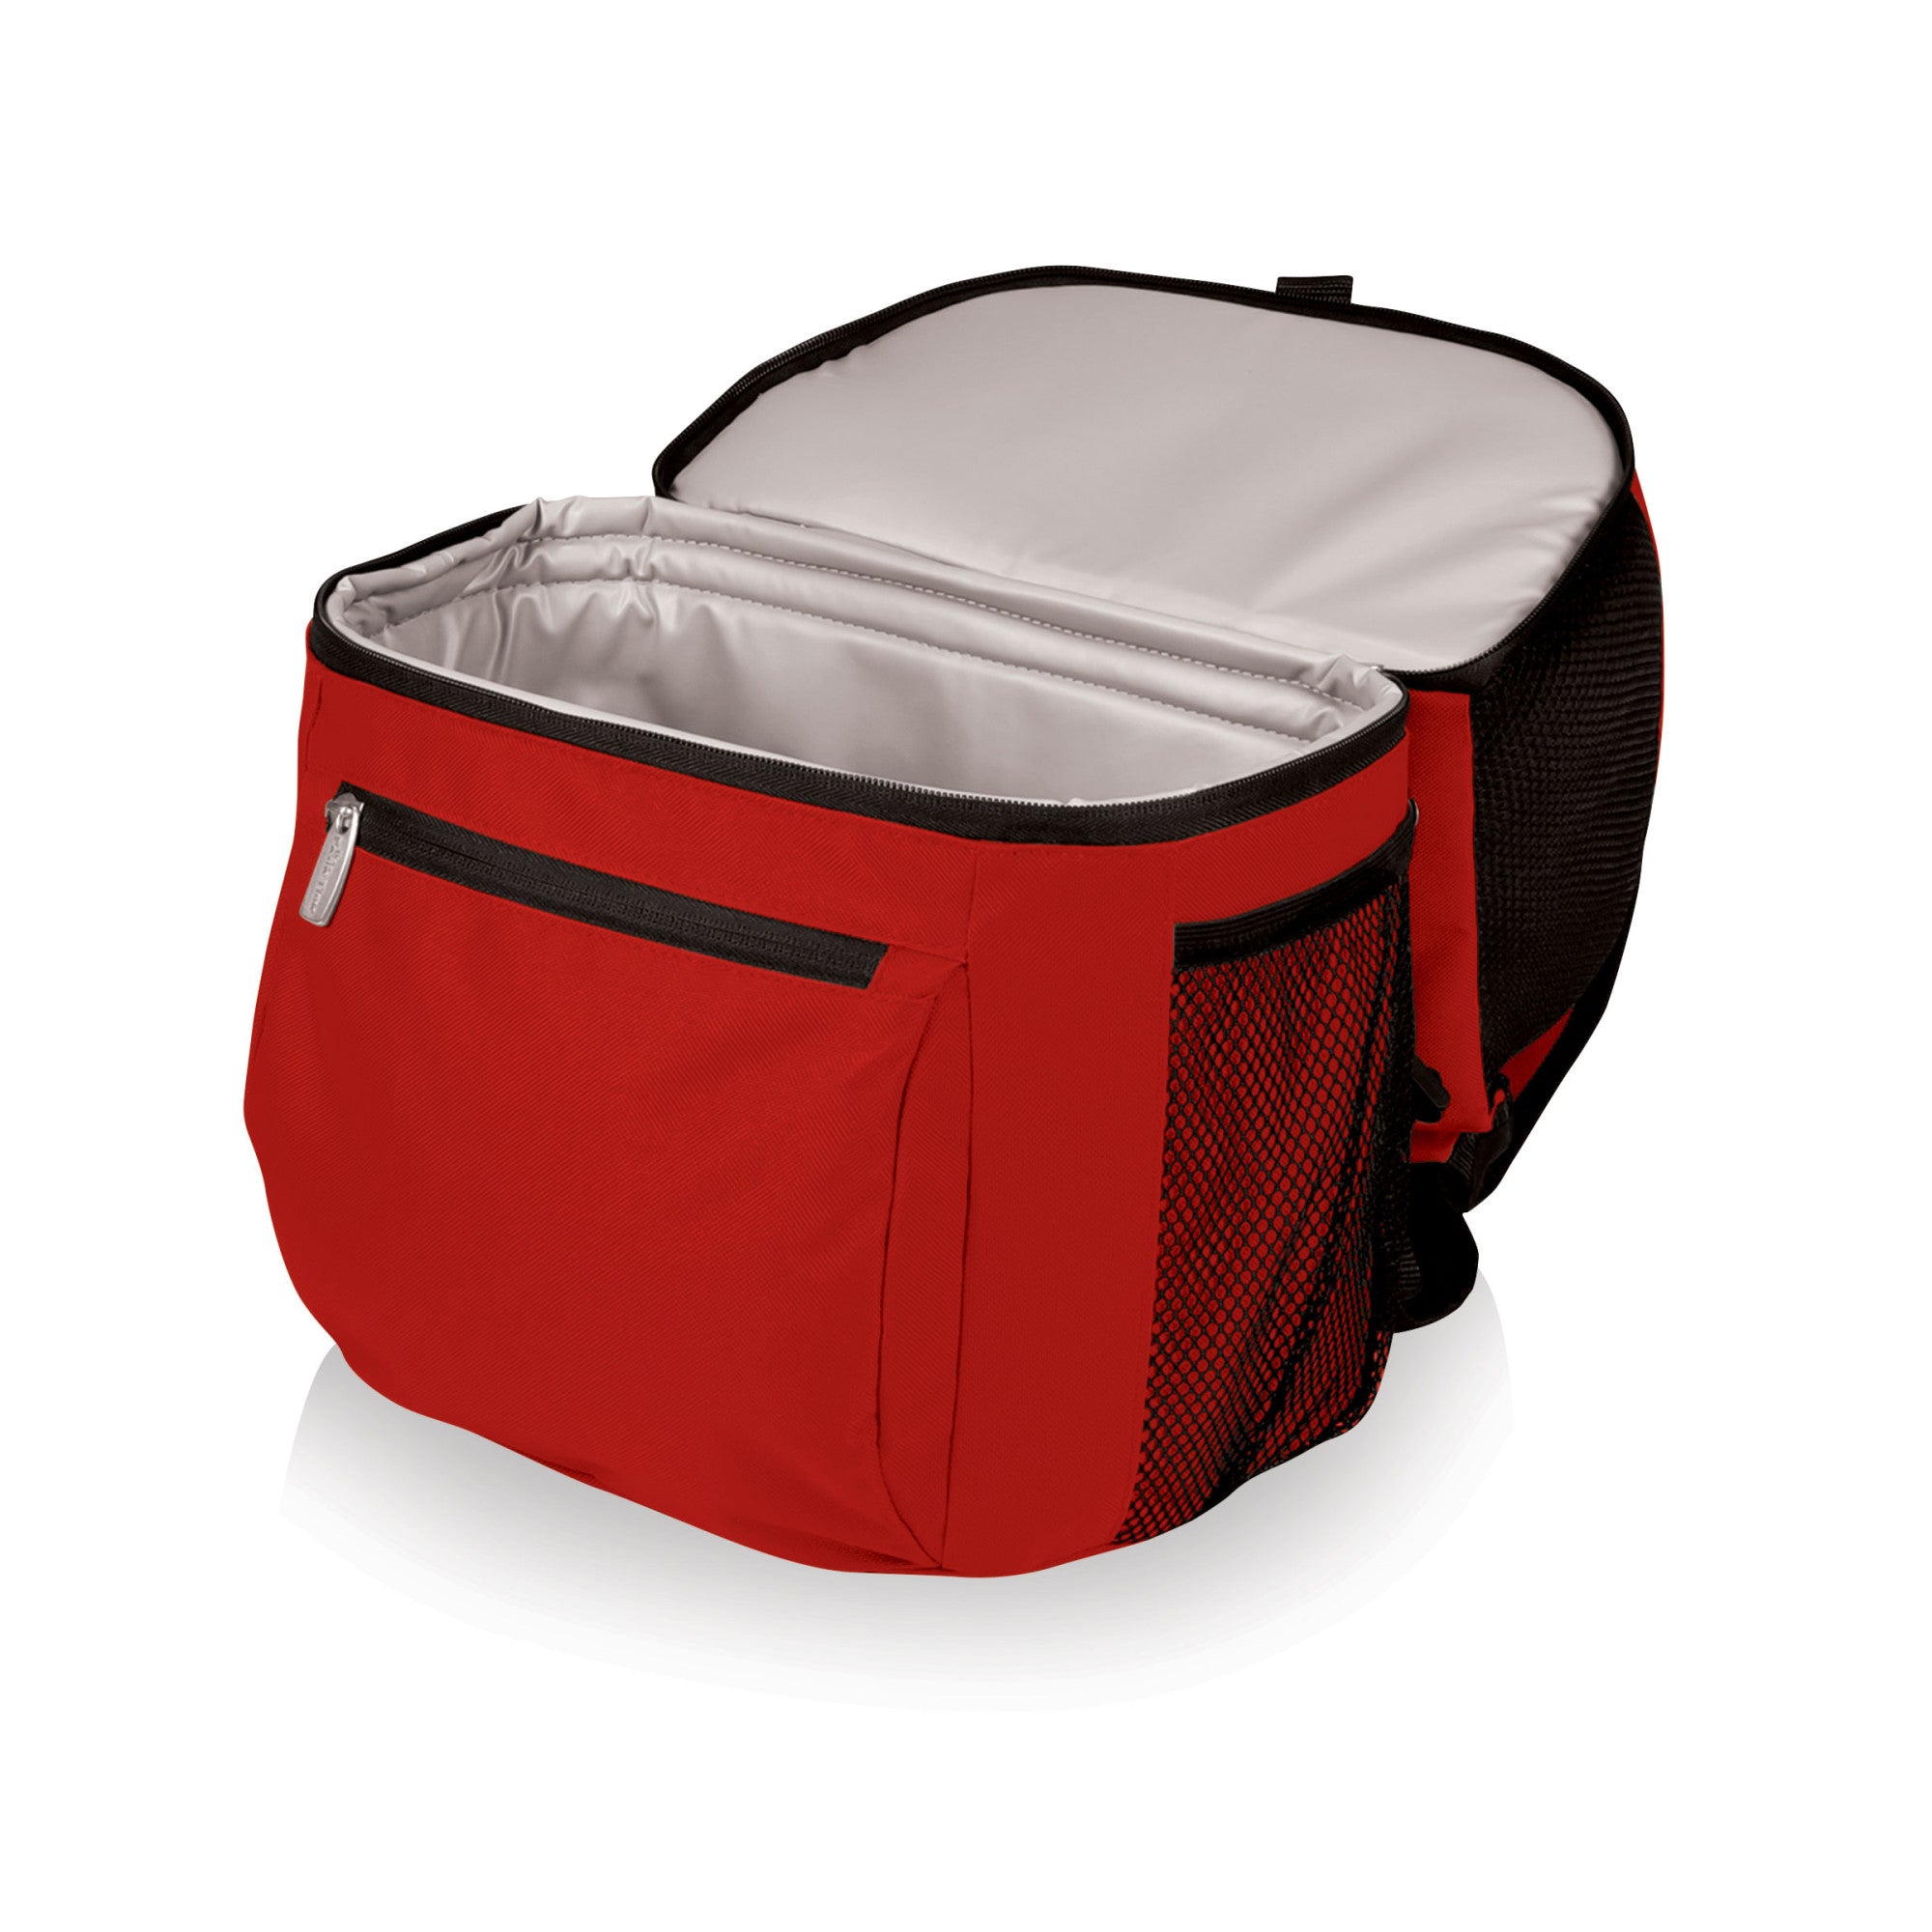 Maryland Terrapins - Zuma Backpack Cooler